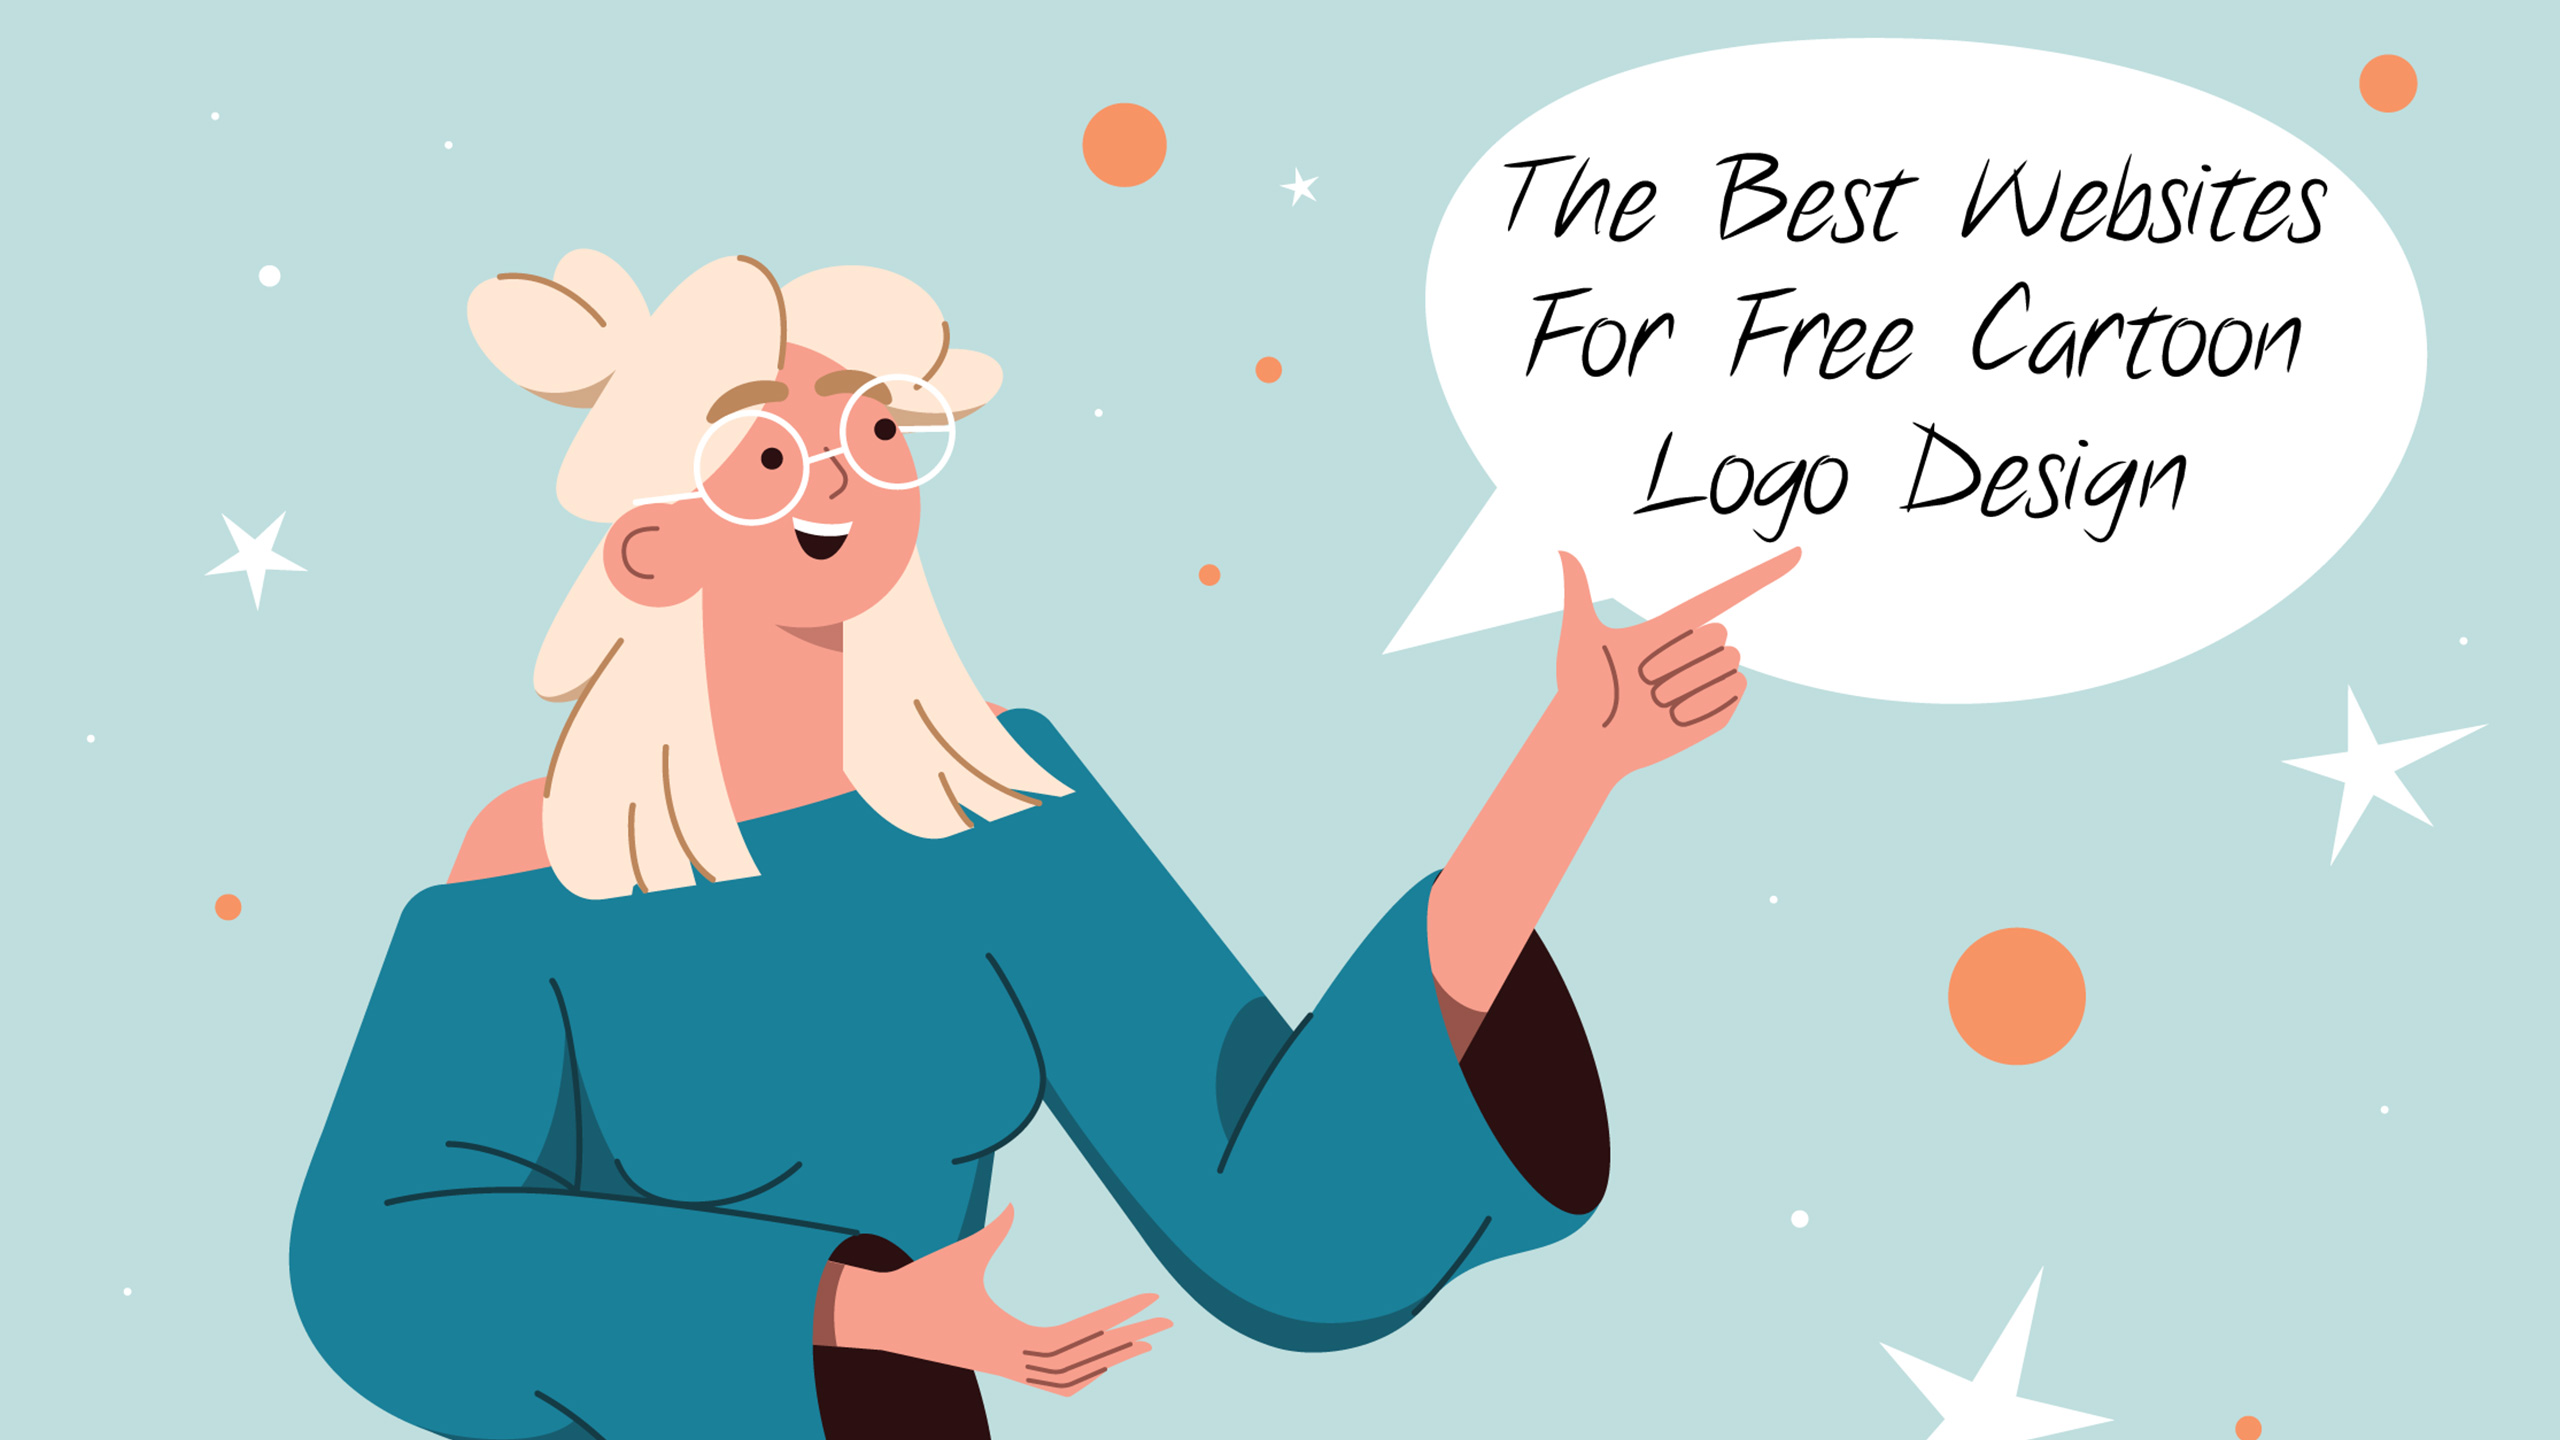 The Best Websites For Free Cartoon Logo Design